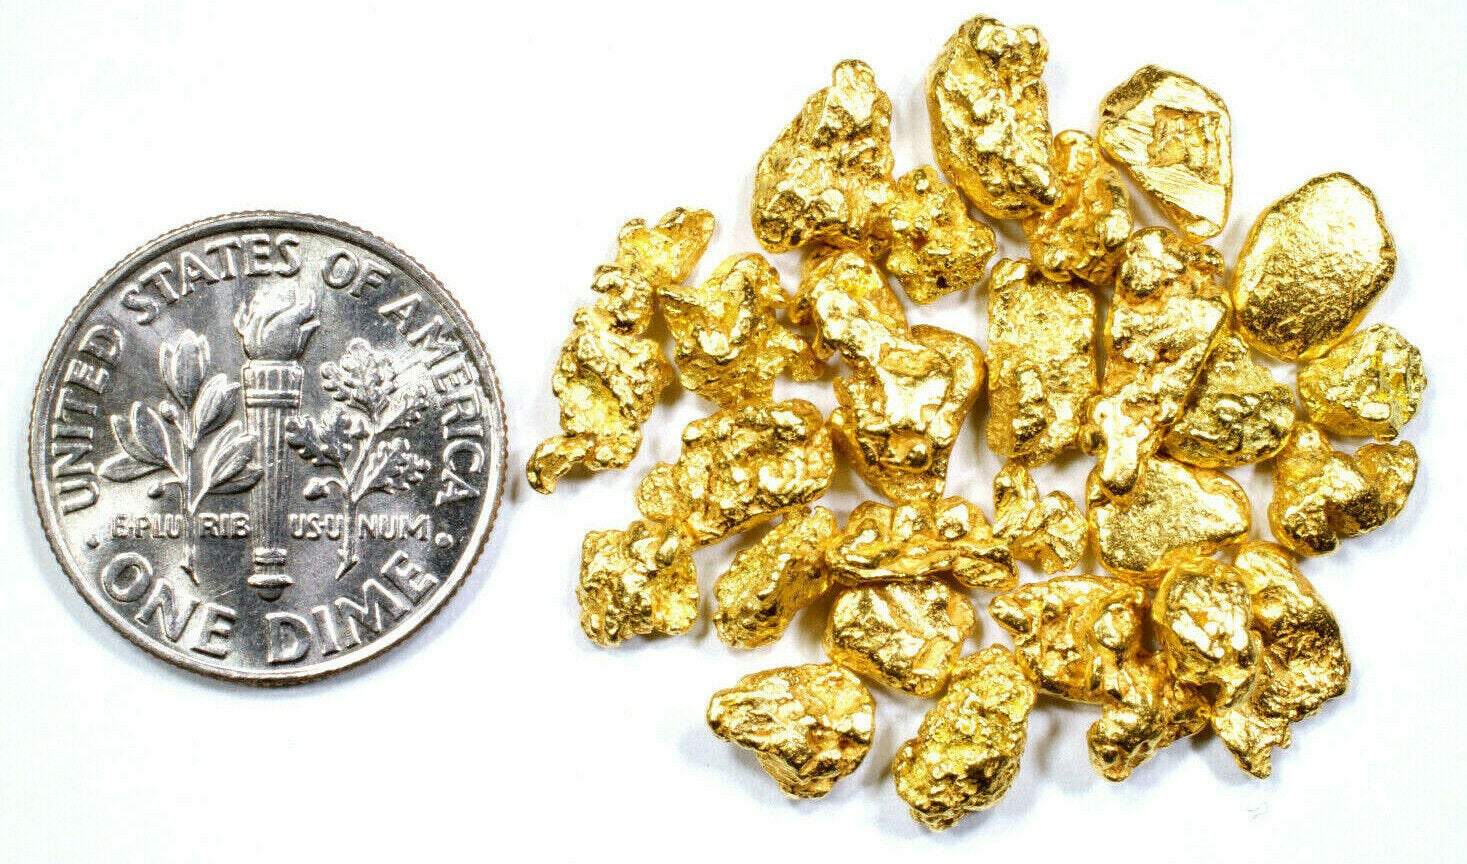 20.000 GRAMS ALASKAN YUKON BC NATURAL PURE GOLD NUGGETS #6 MESH - Liquidbullion